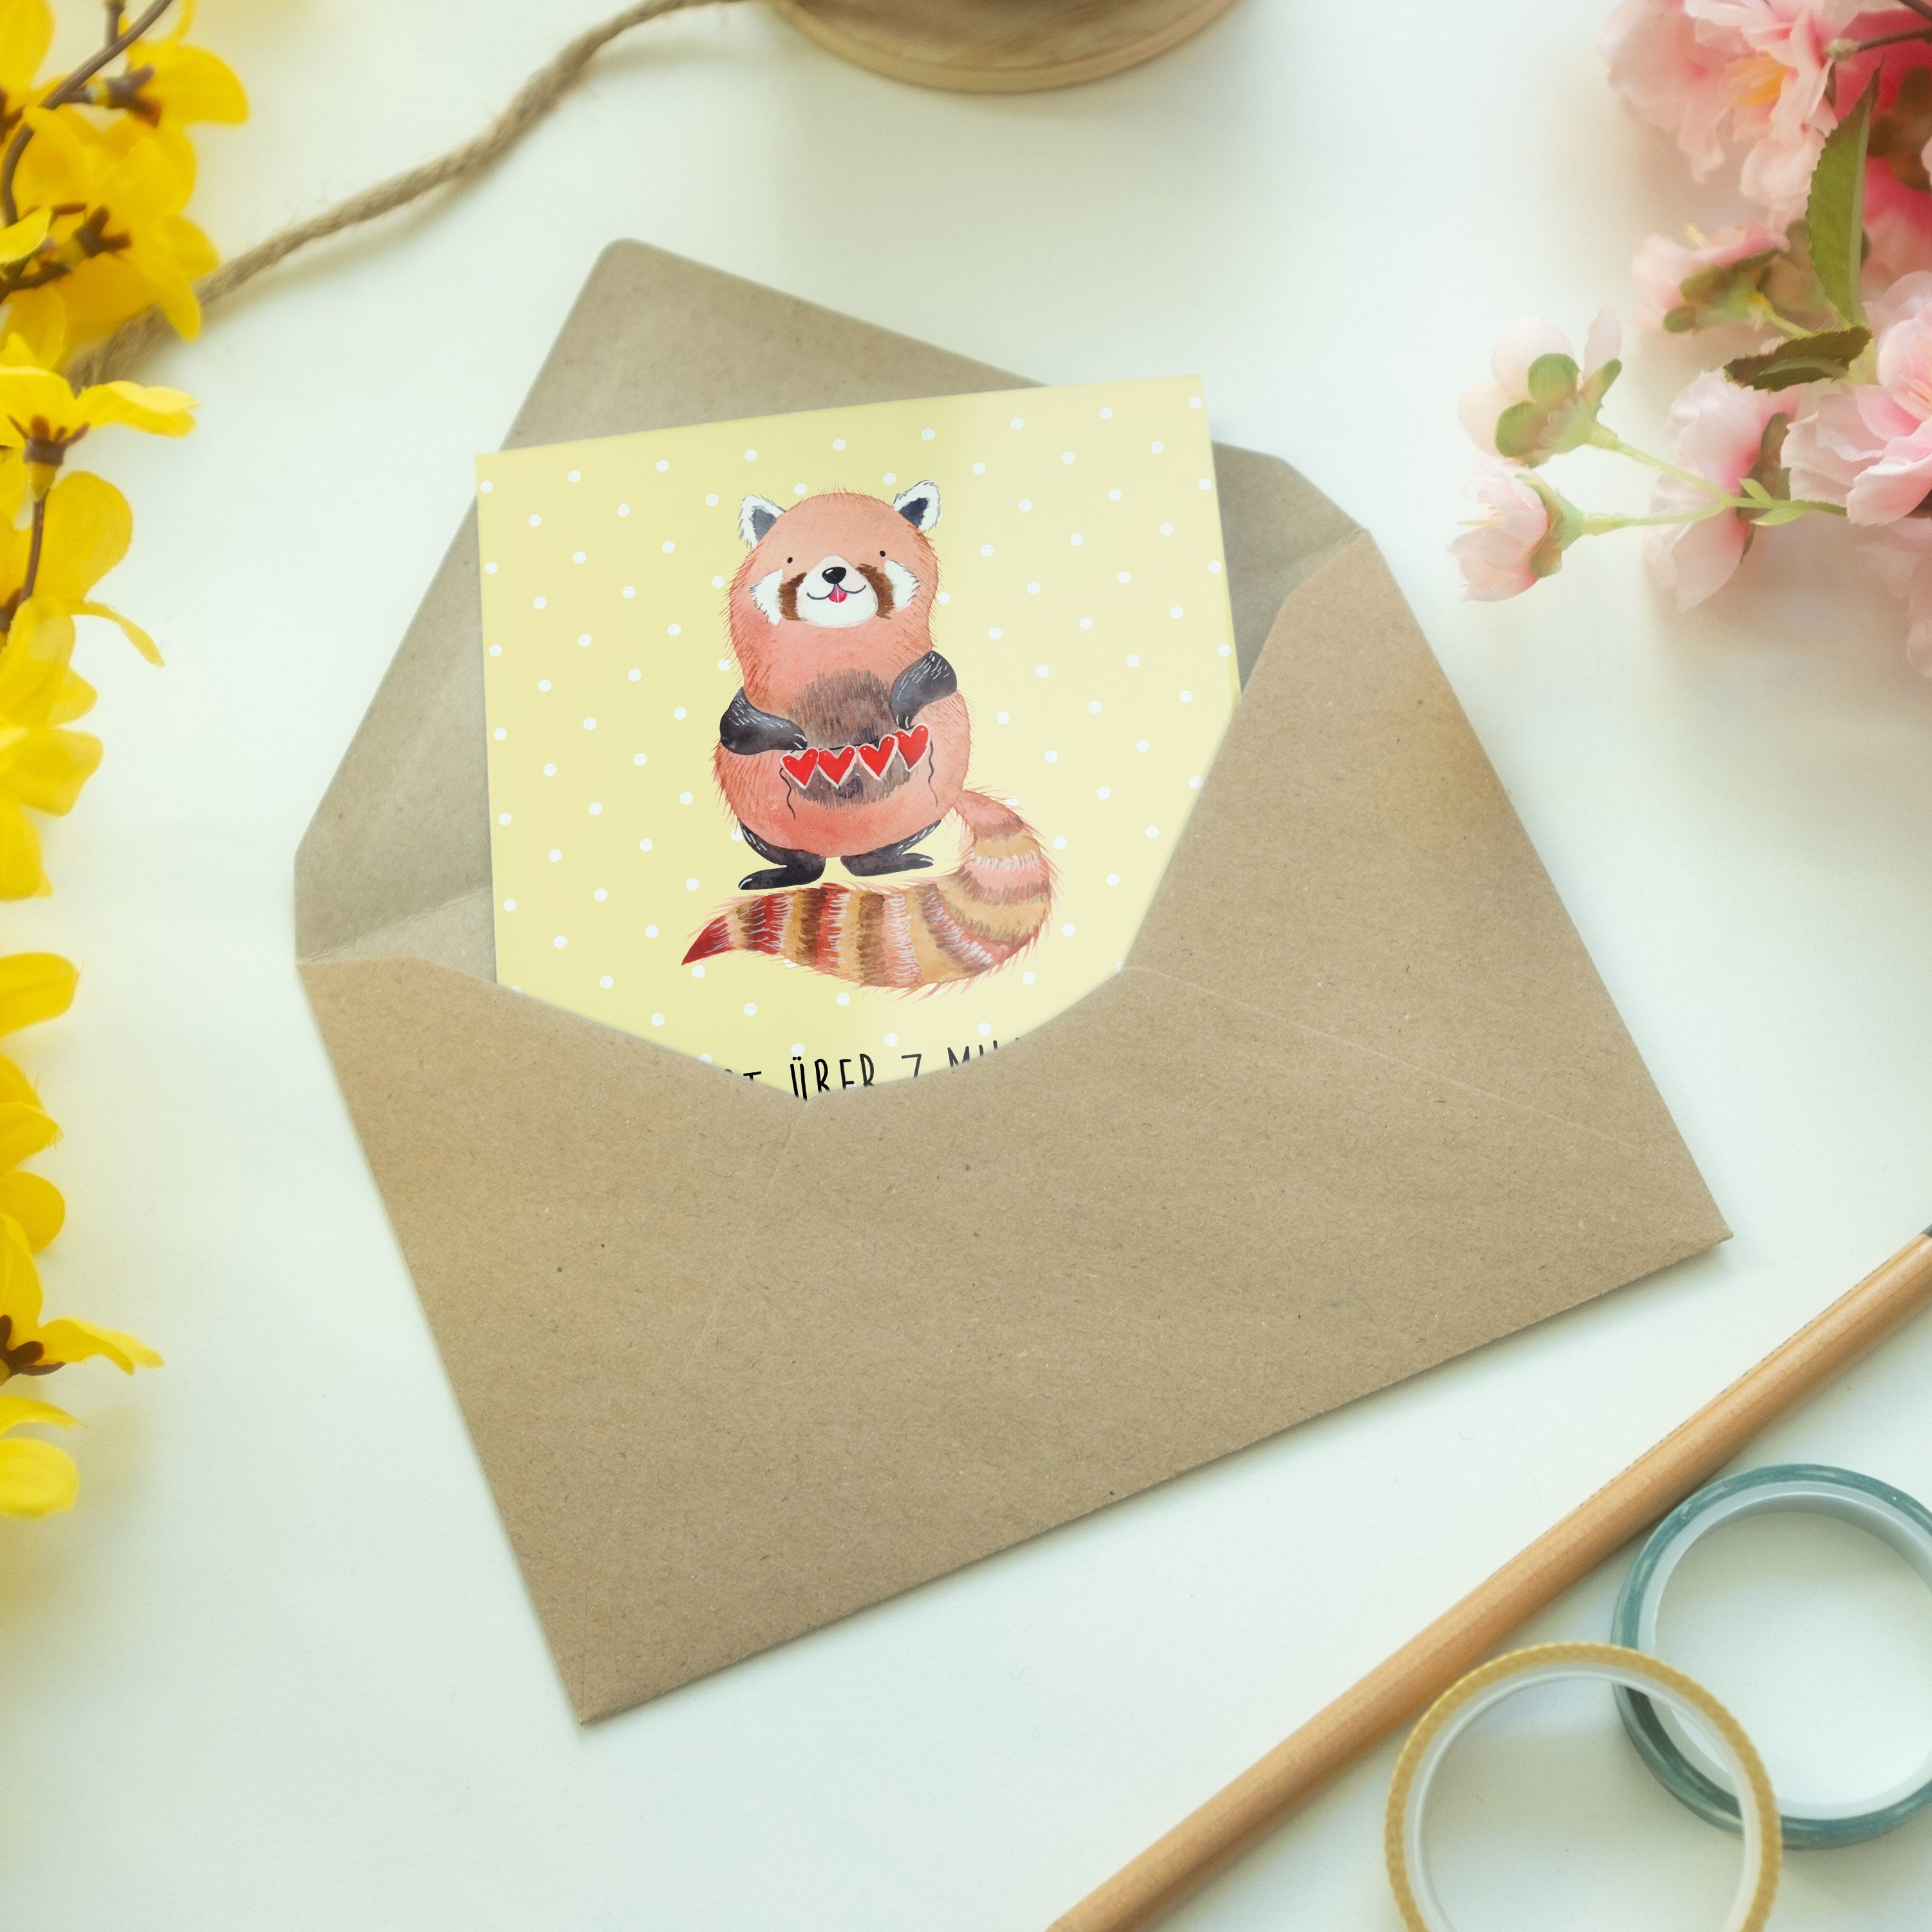 Grußkarte Pastell Panda Mr. Mrs. Hochzeitskarte, - Panda Roter & Gelb - Geschenk, Glückwunschkar